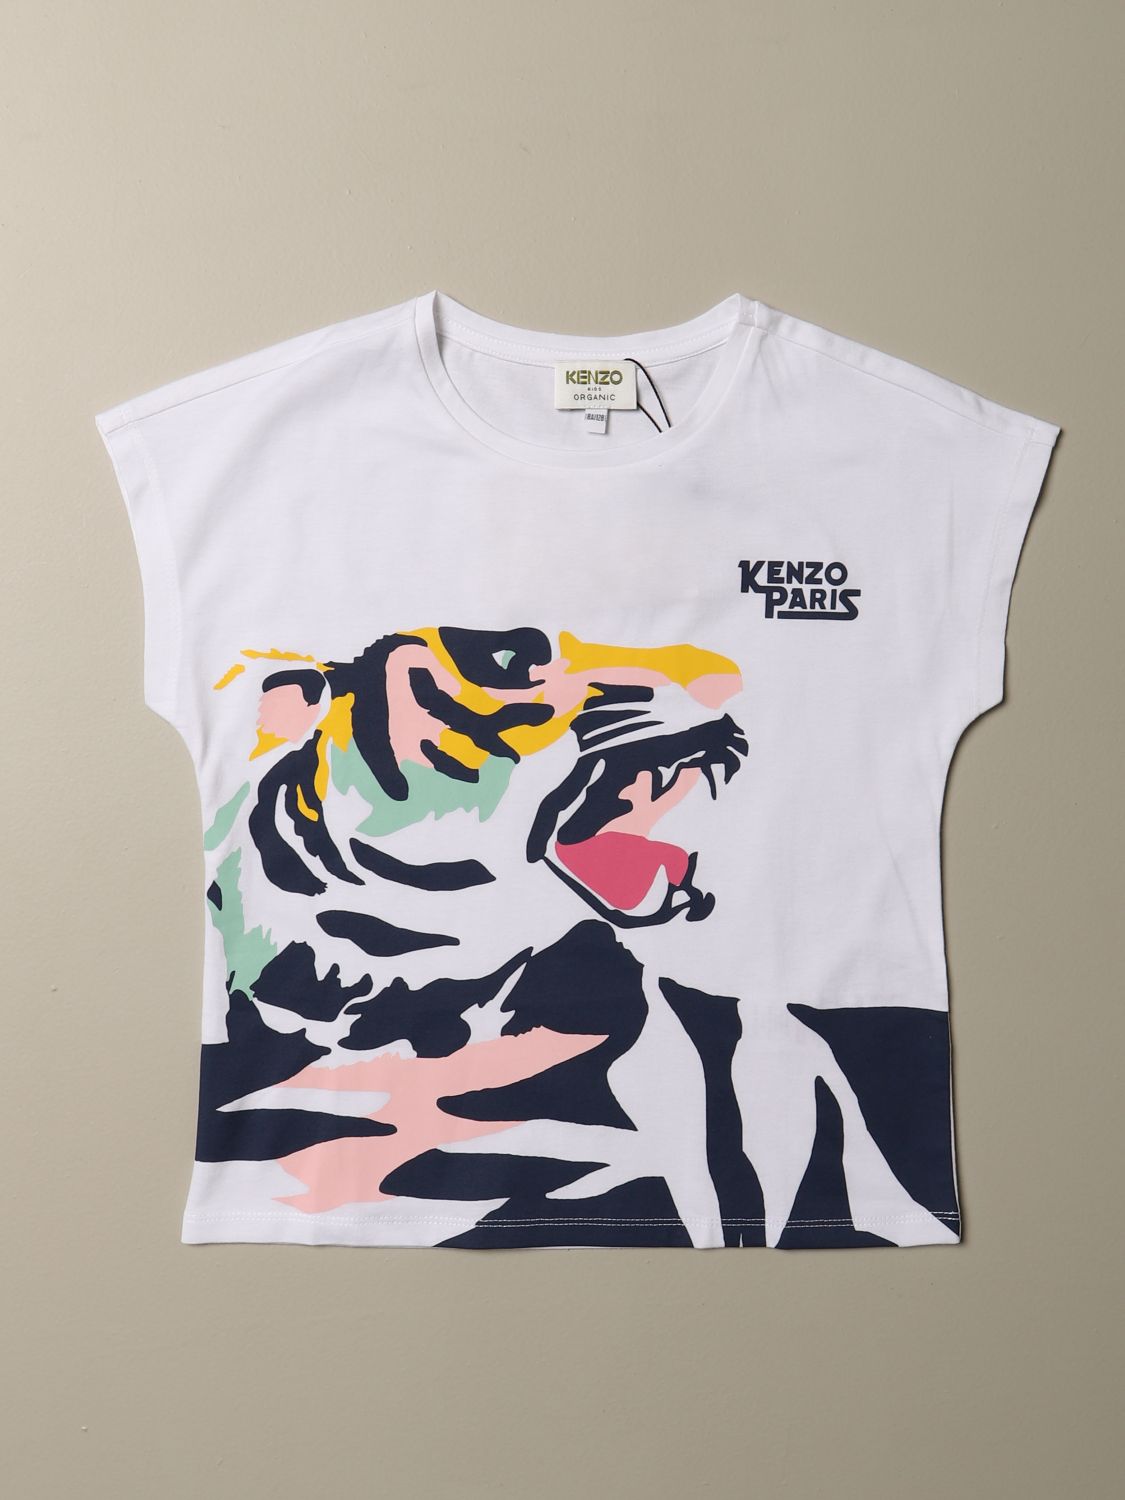 kenzo tiger print t shirt